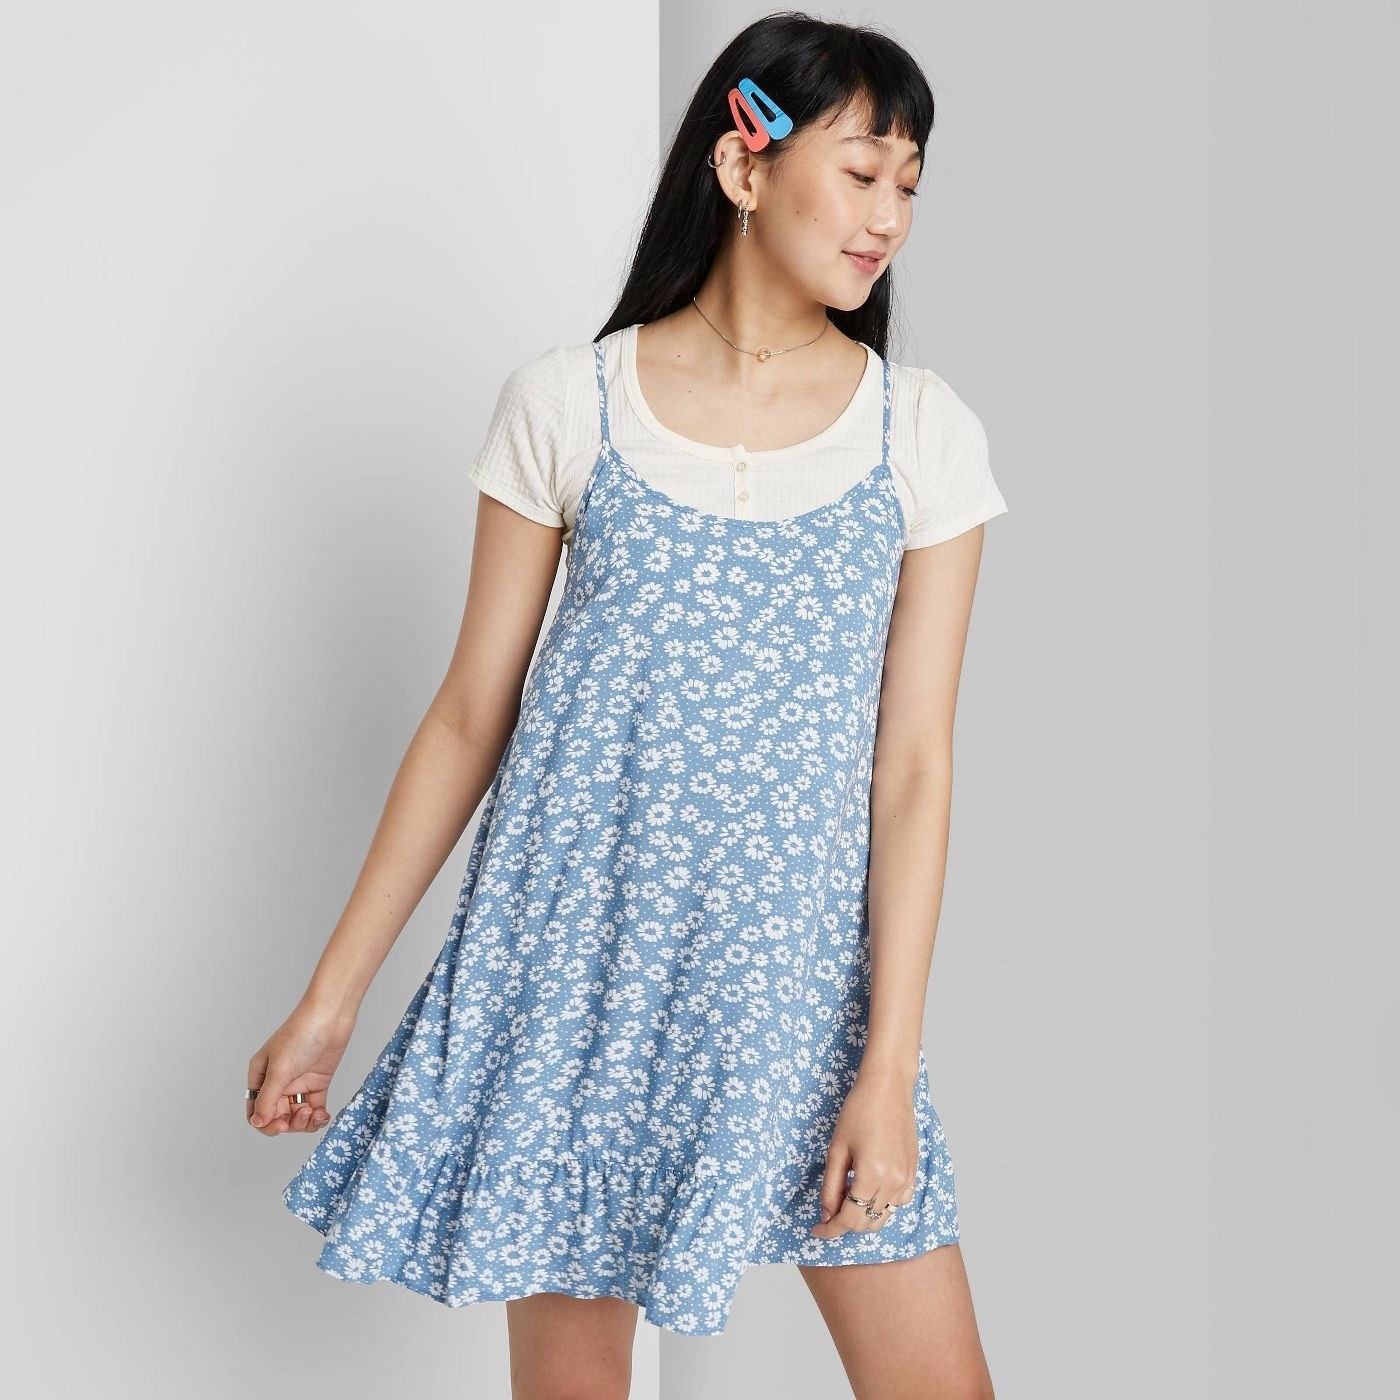 model wearing a blue floral print dress 